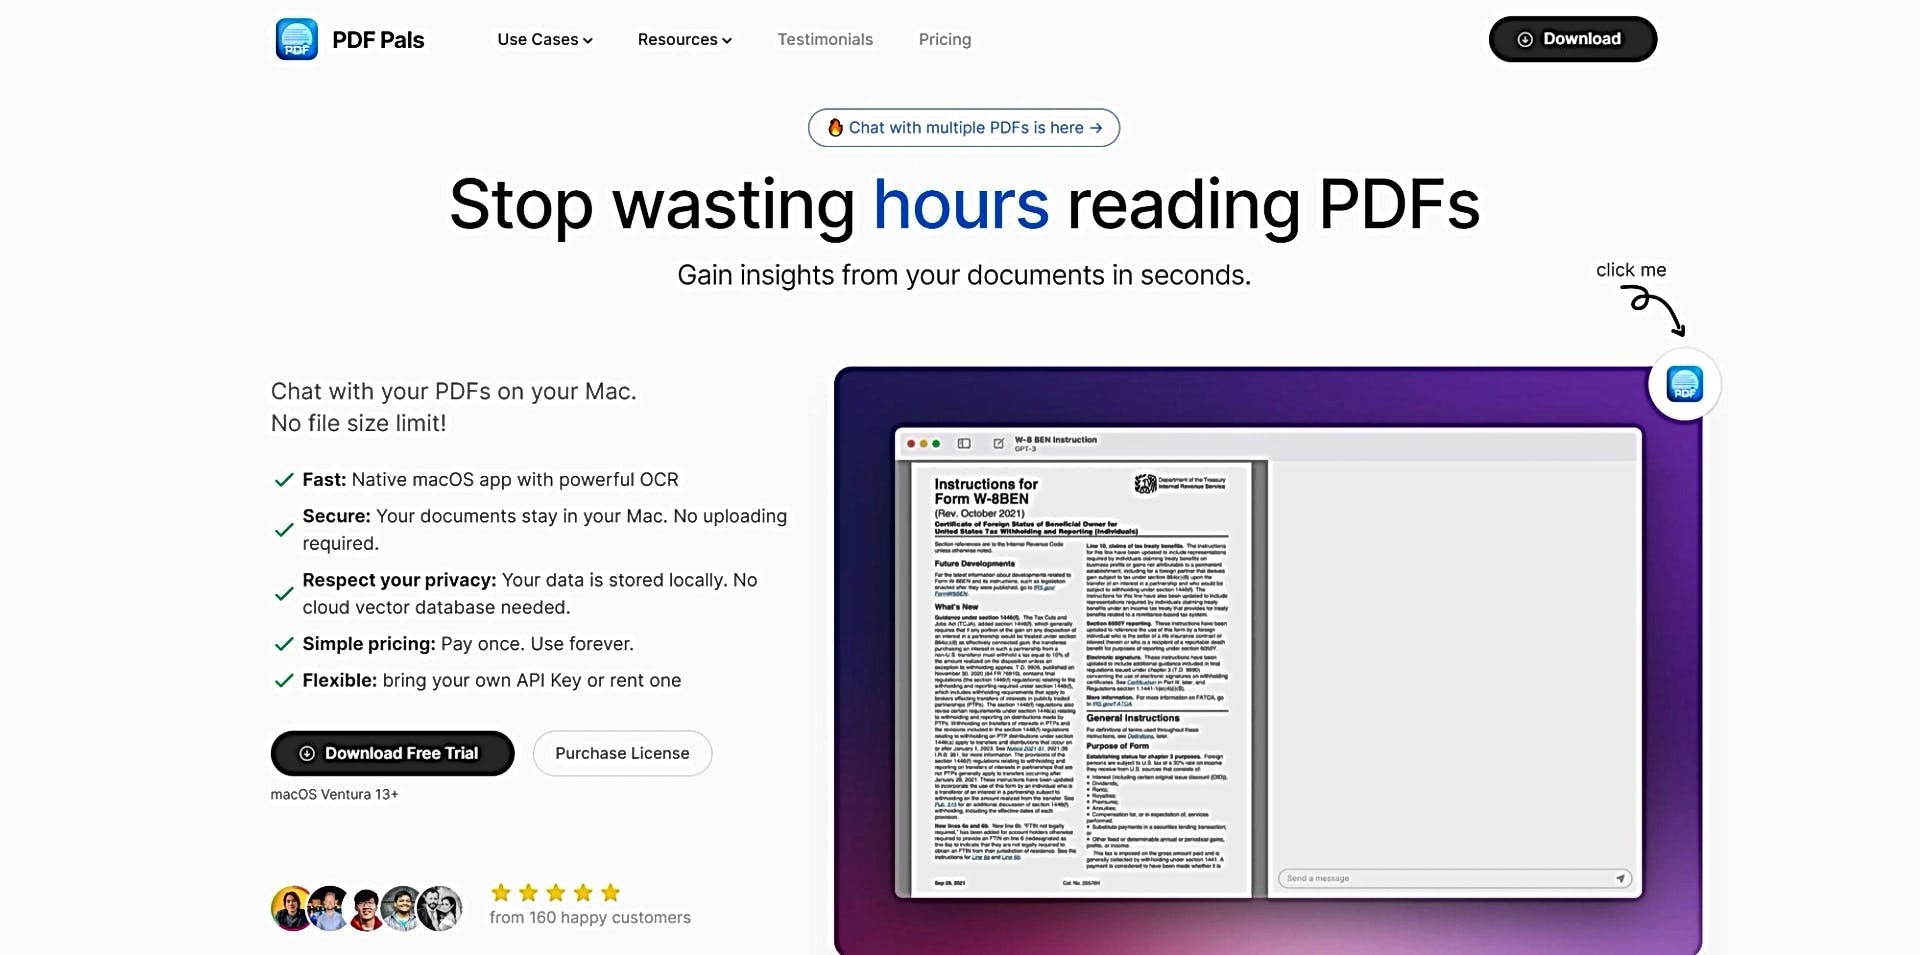 PDF Pals featured